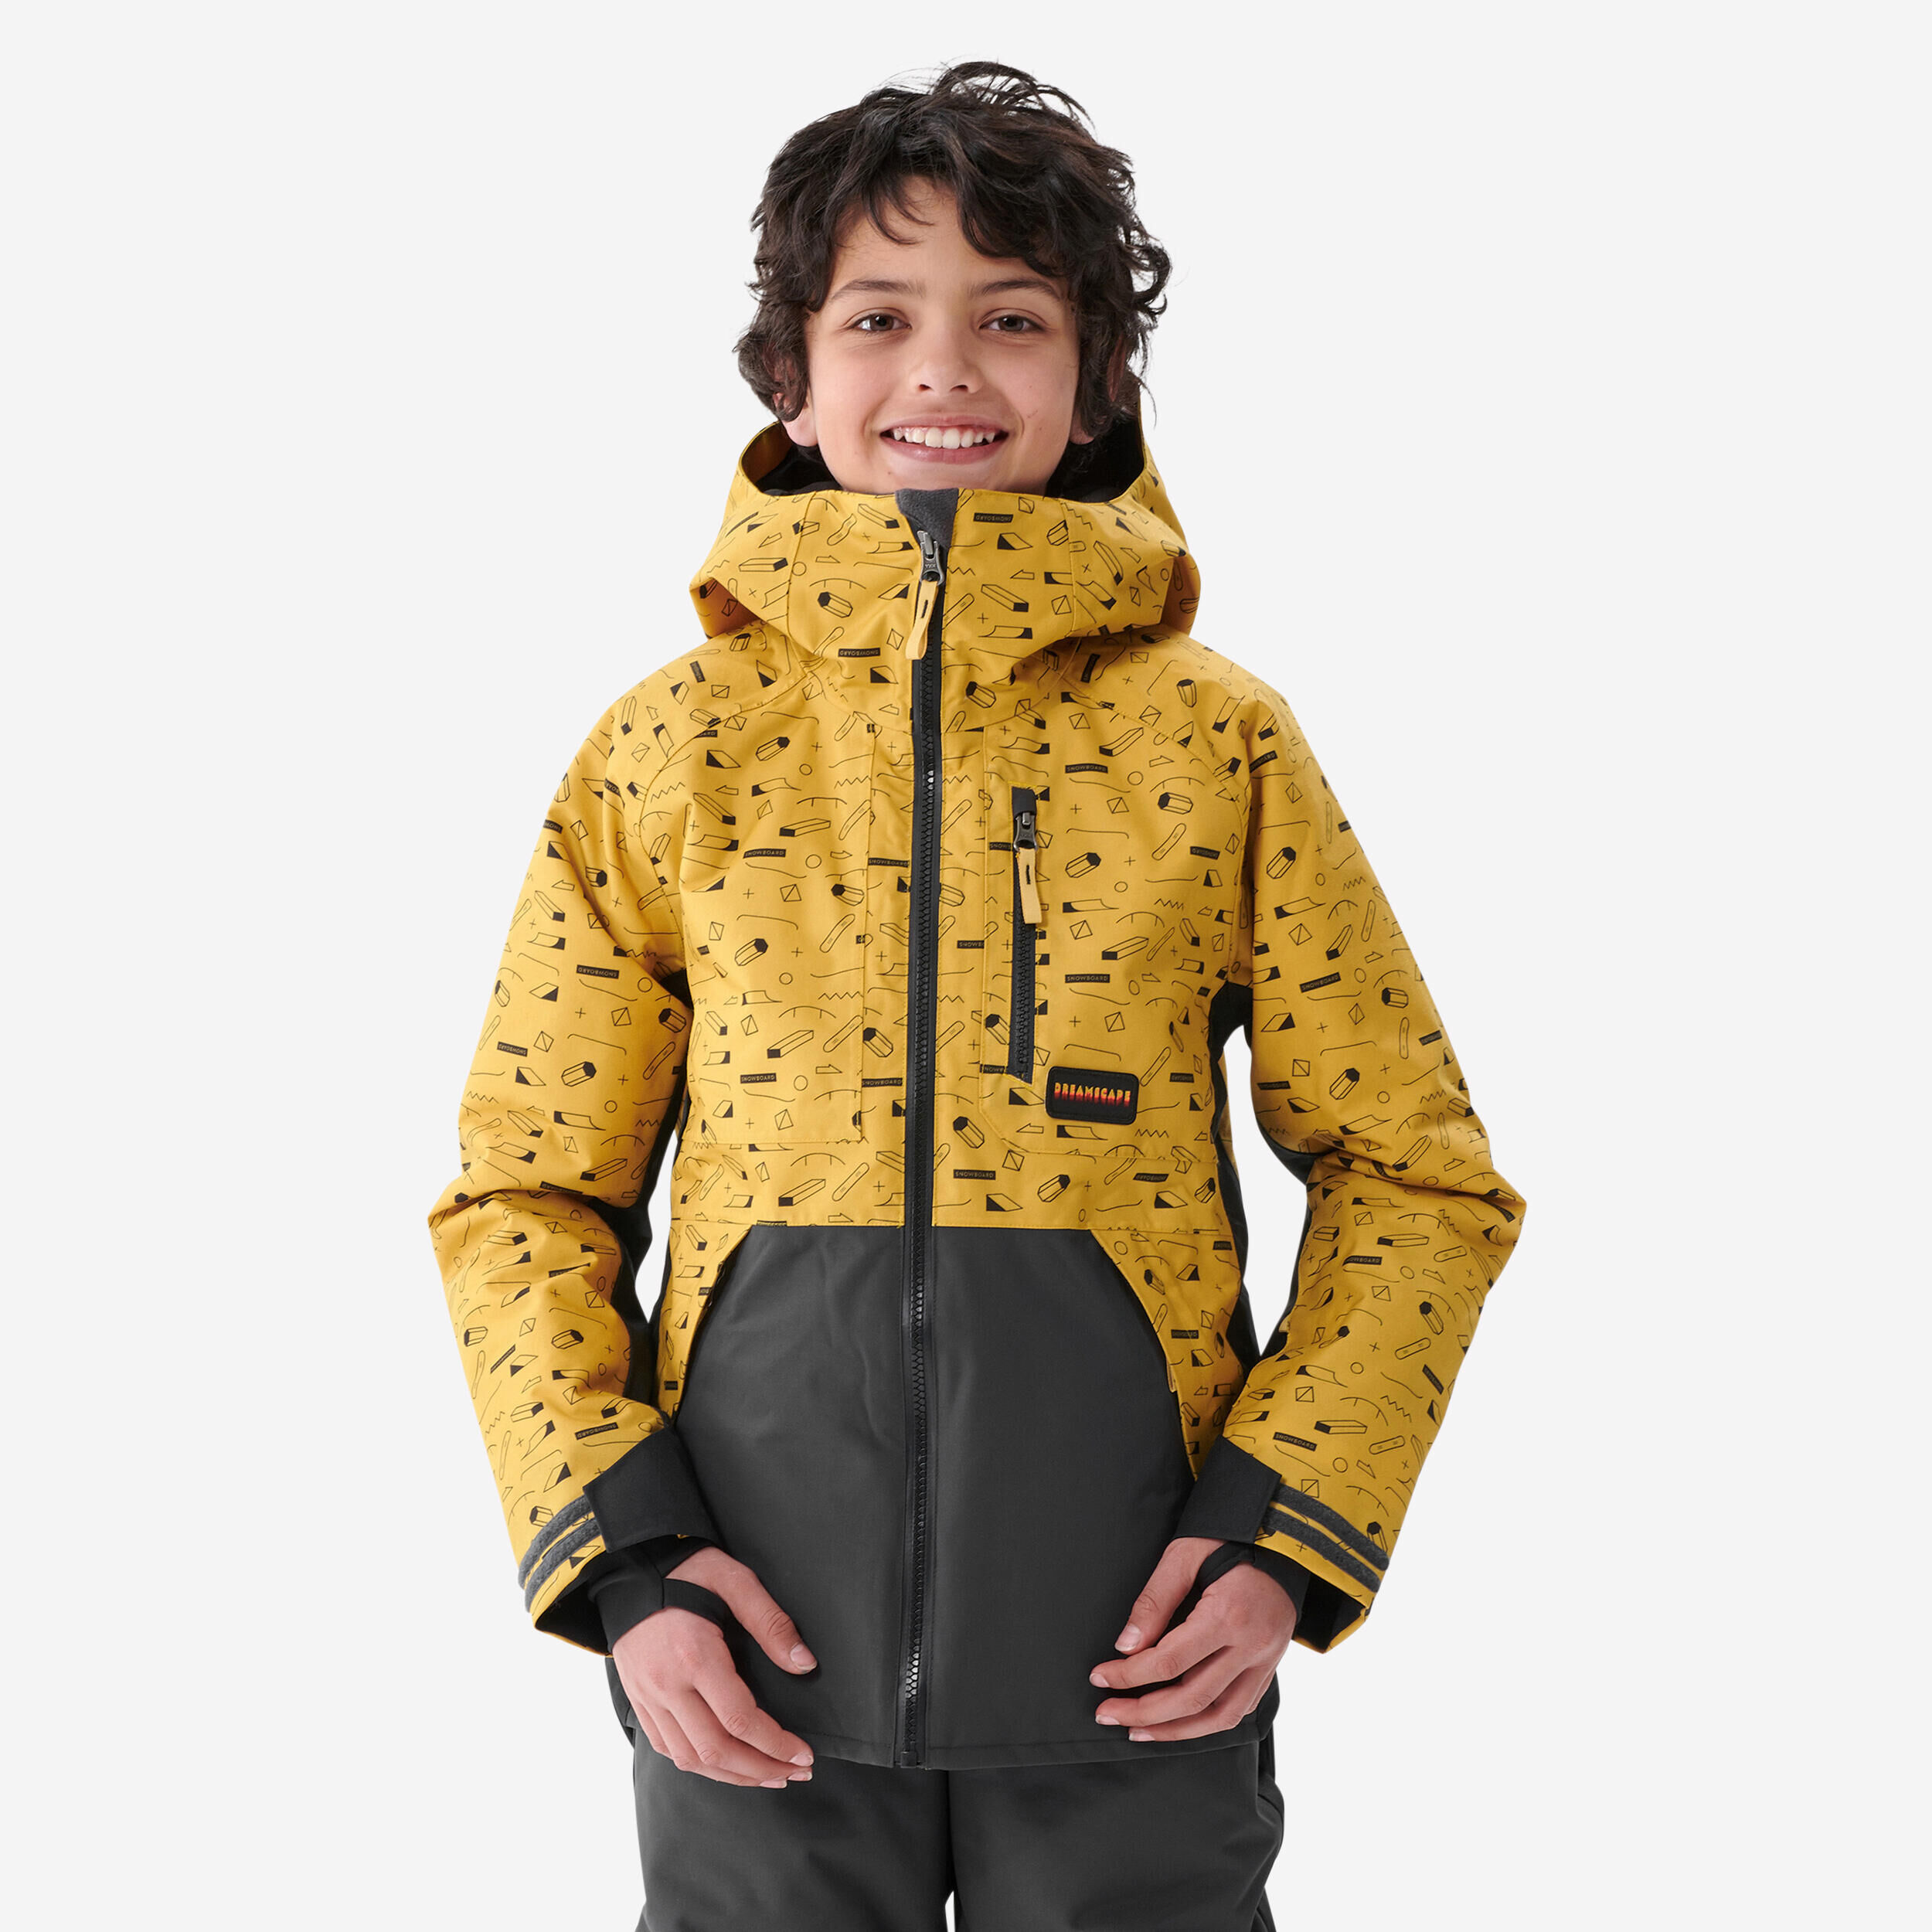 DREAMSCAPE KIDS’ SNOWBOARD SNB 500 JACKET – yellow